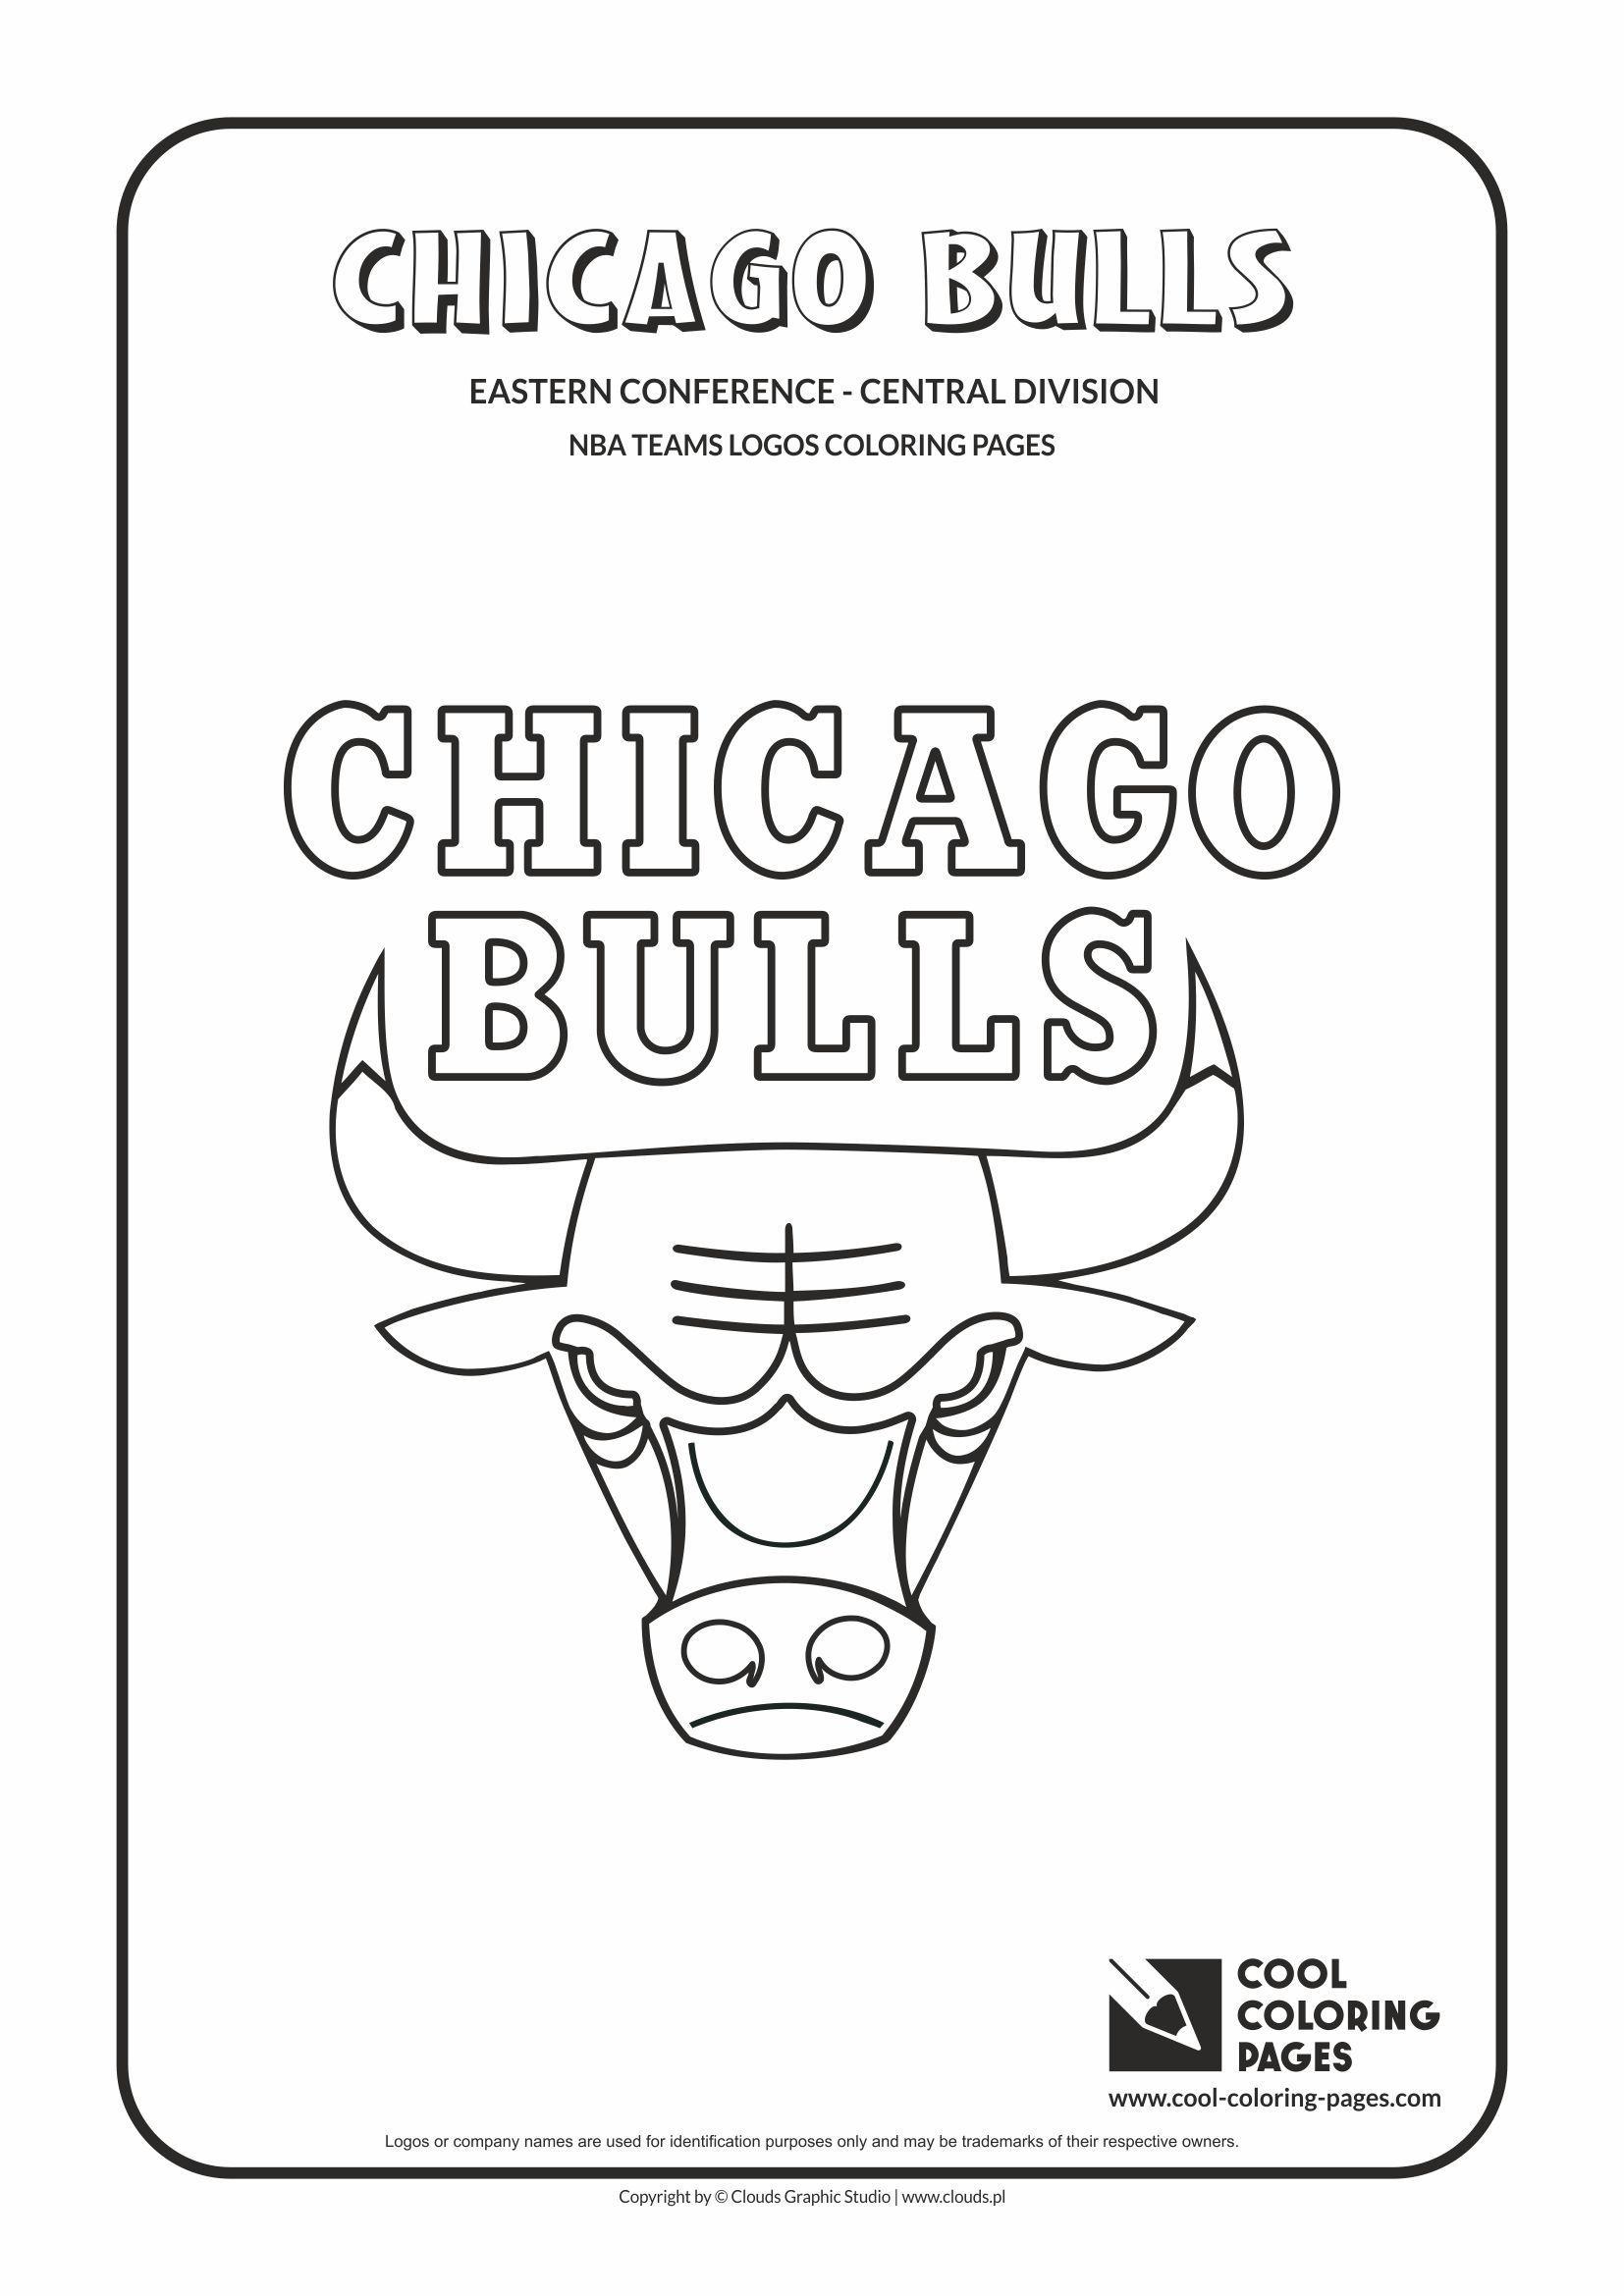 Cool Basketball Team Logo - Cool Coloring Pages - NBA Teams Logos / Chicago Bulls logo ...